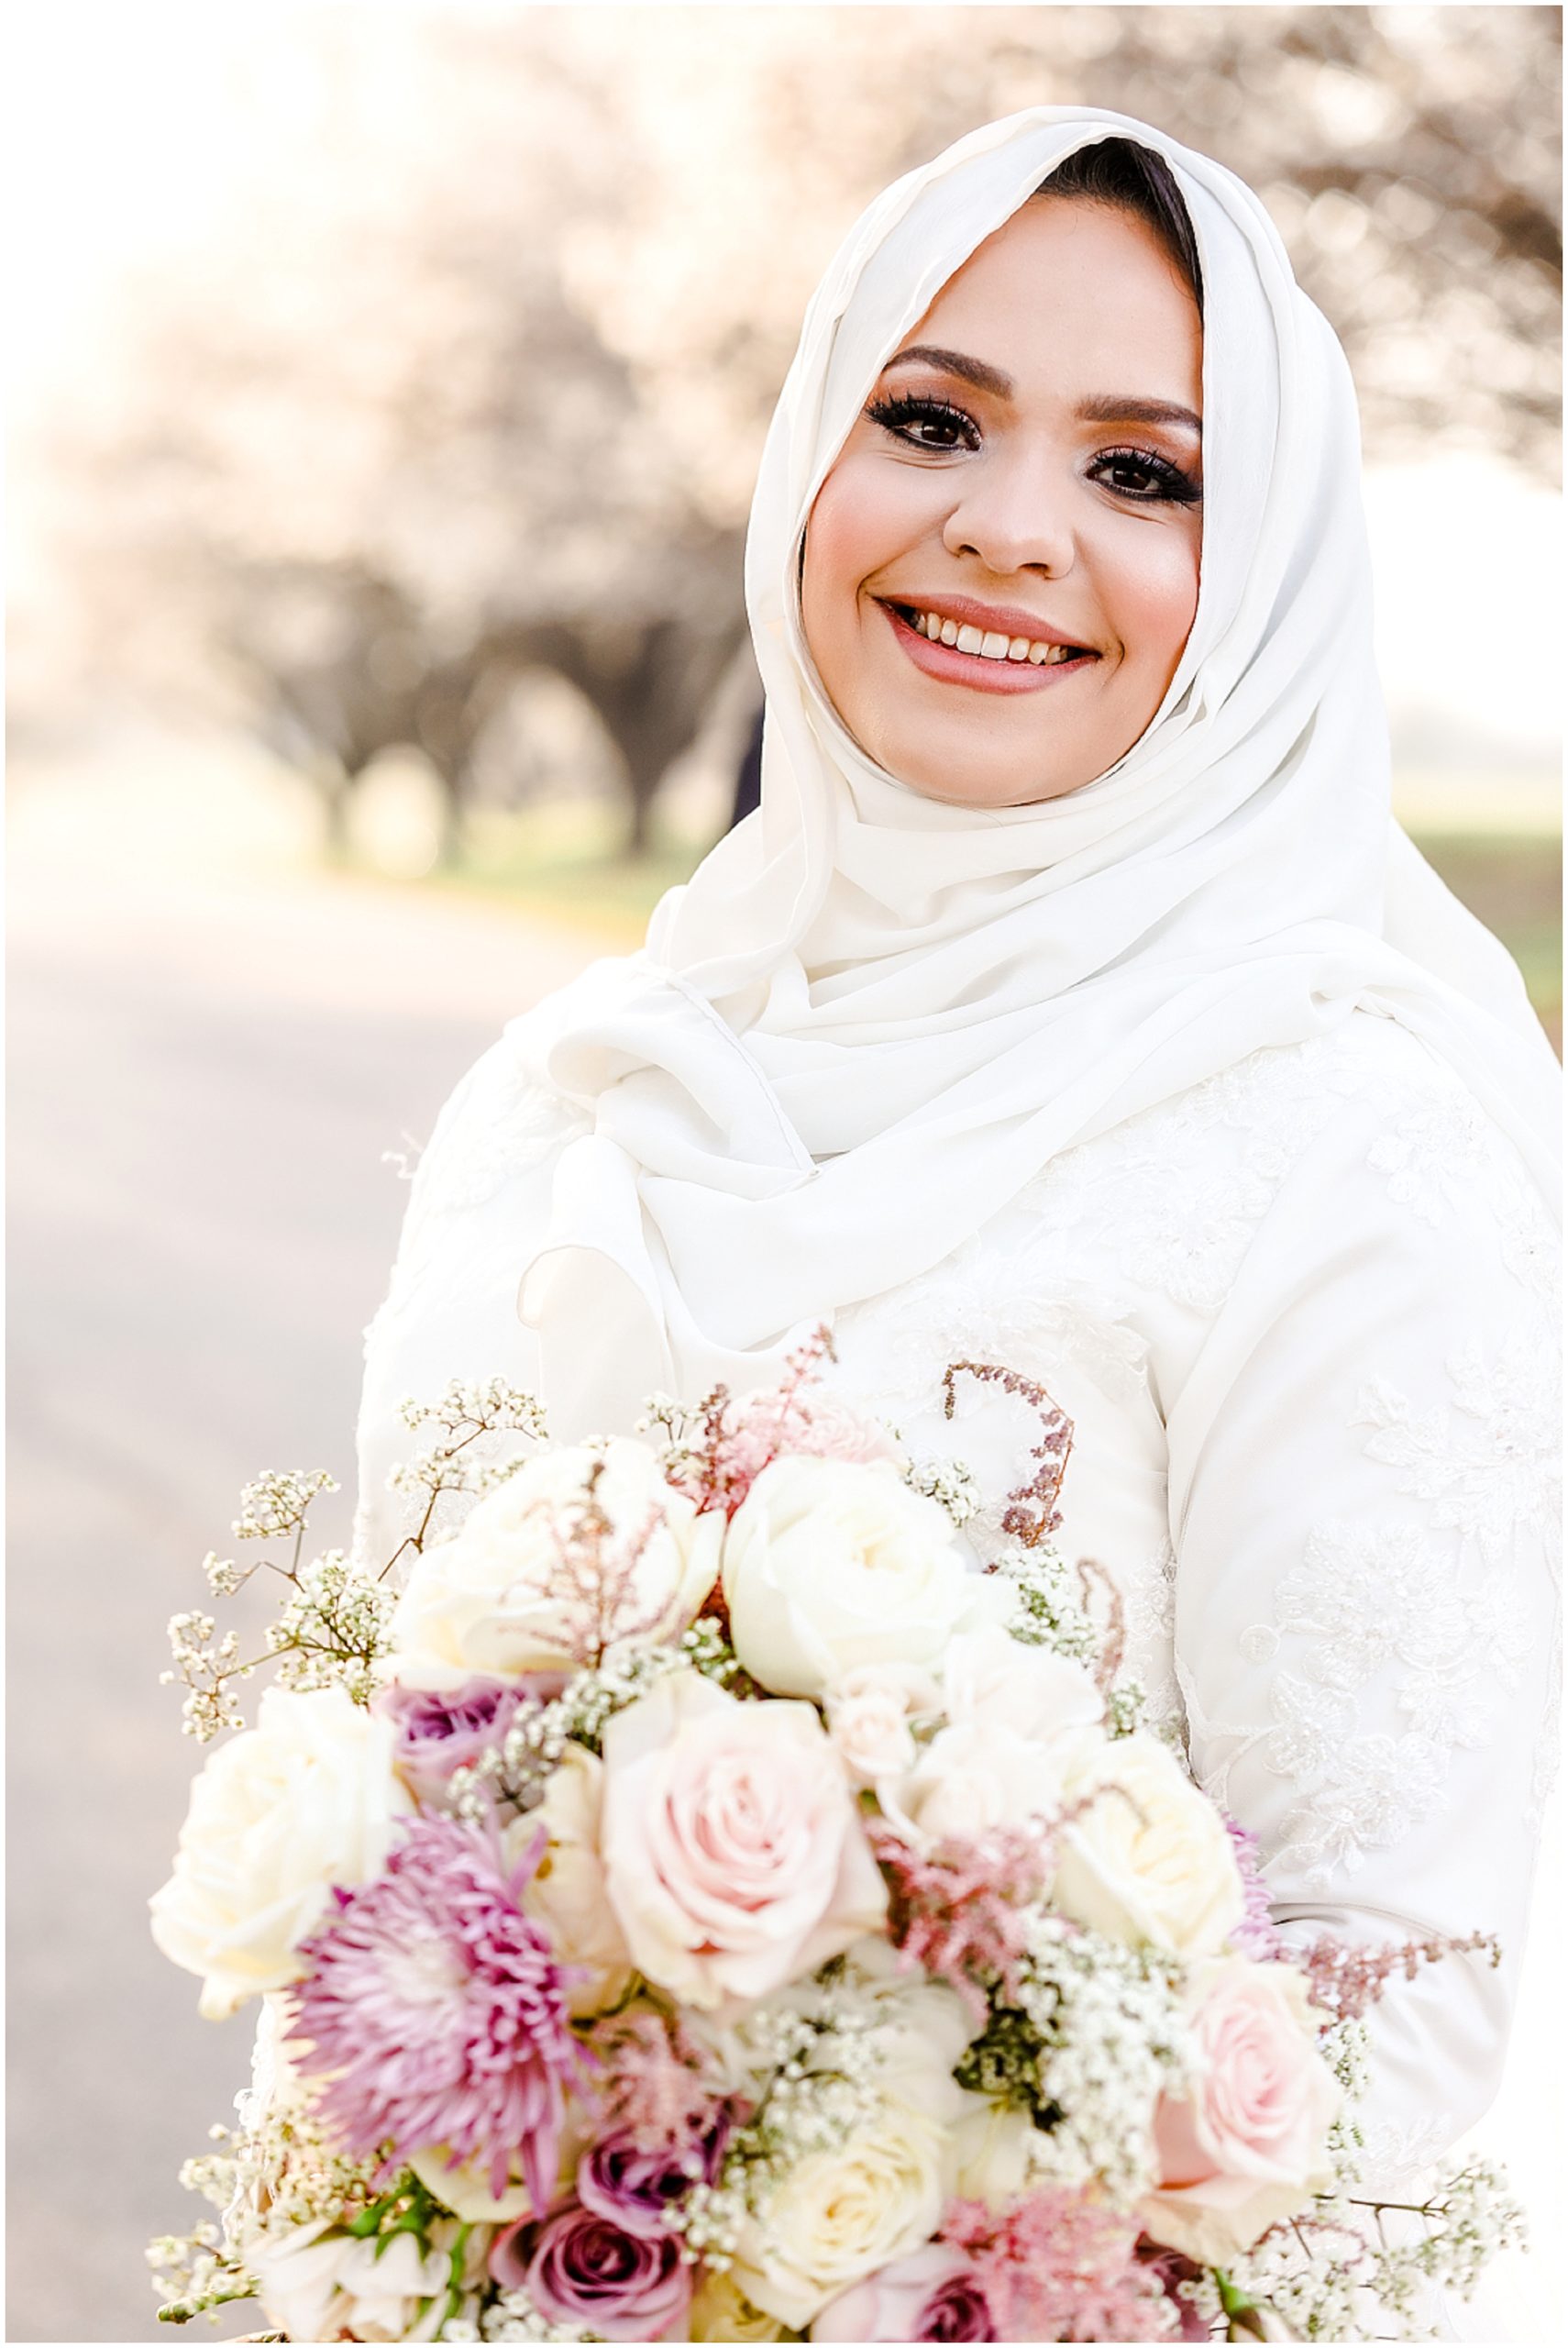 beautiful muslim arab bride with long wedding veil - dreamy wedding photos at kansas shawnee mission park